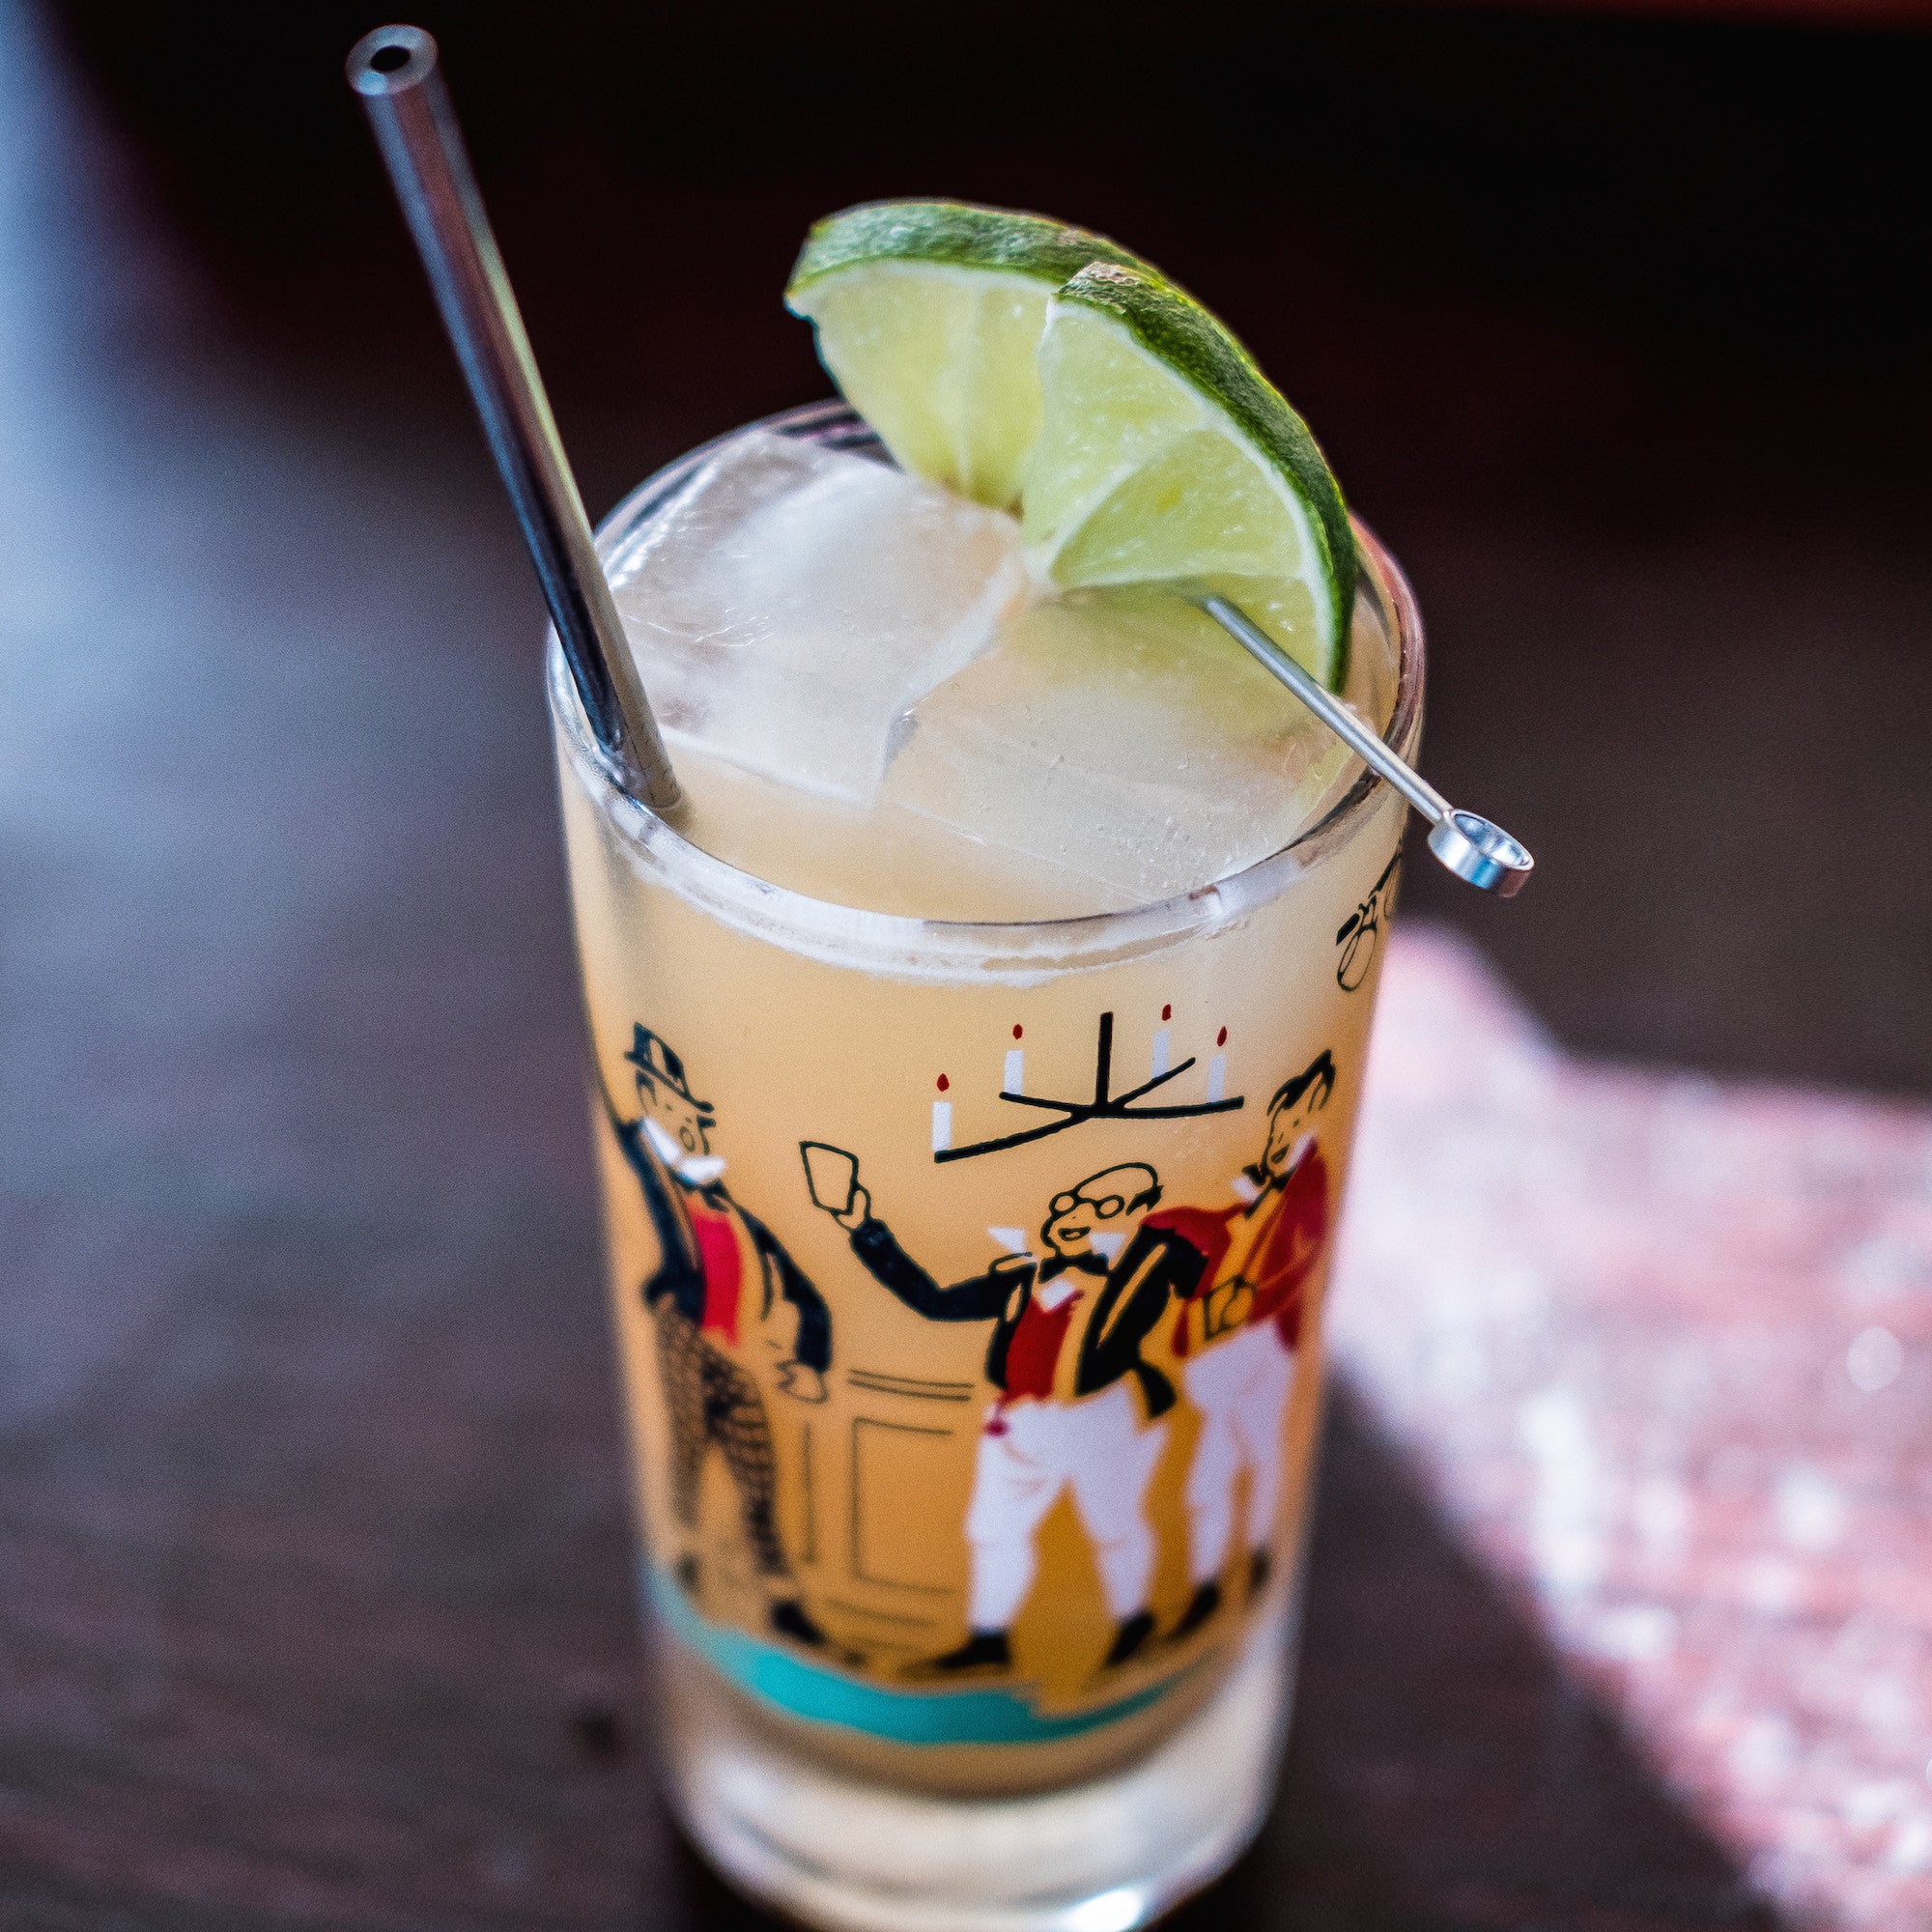 Washington mule cocktail